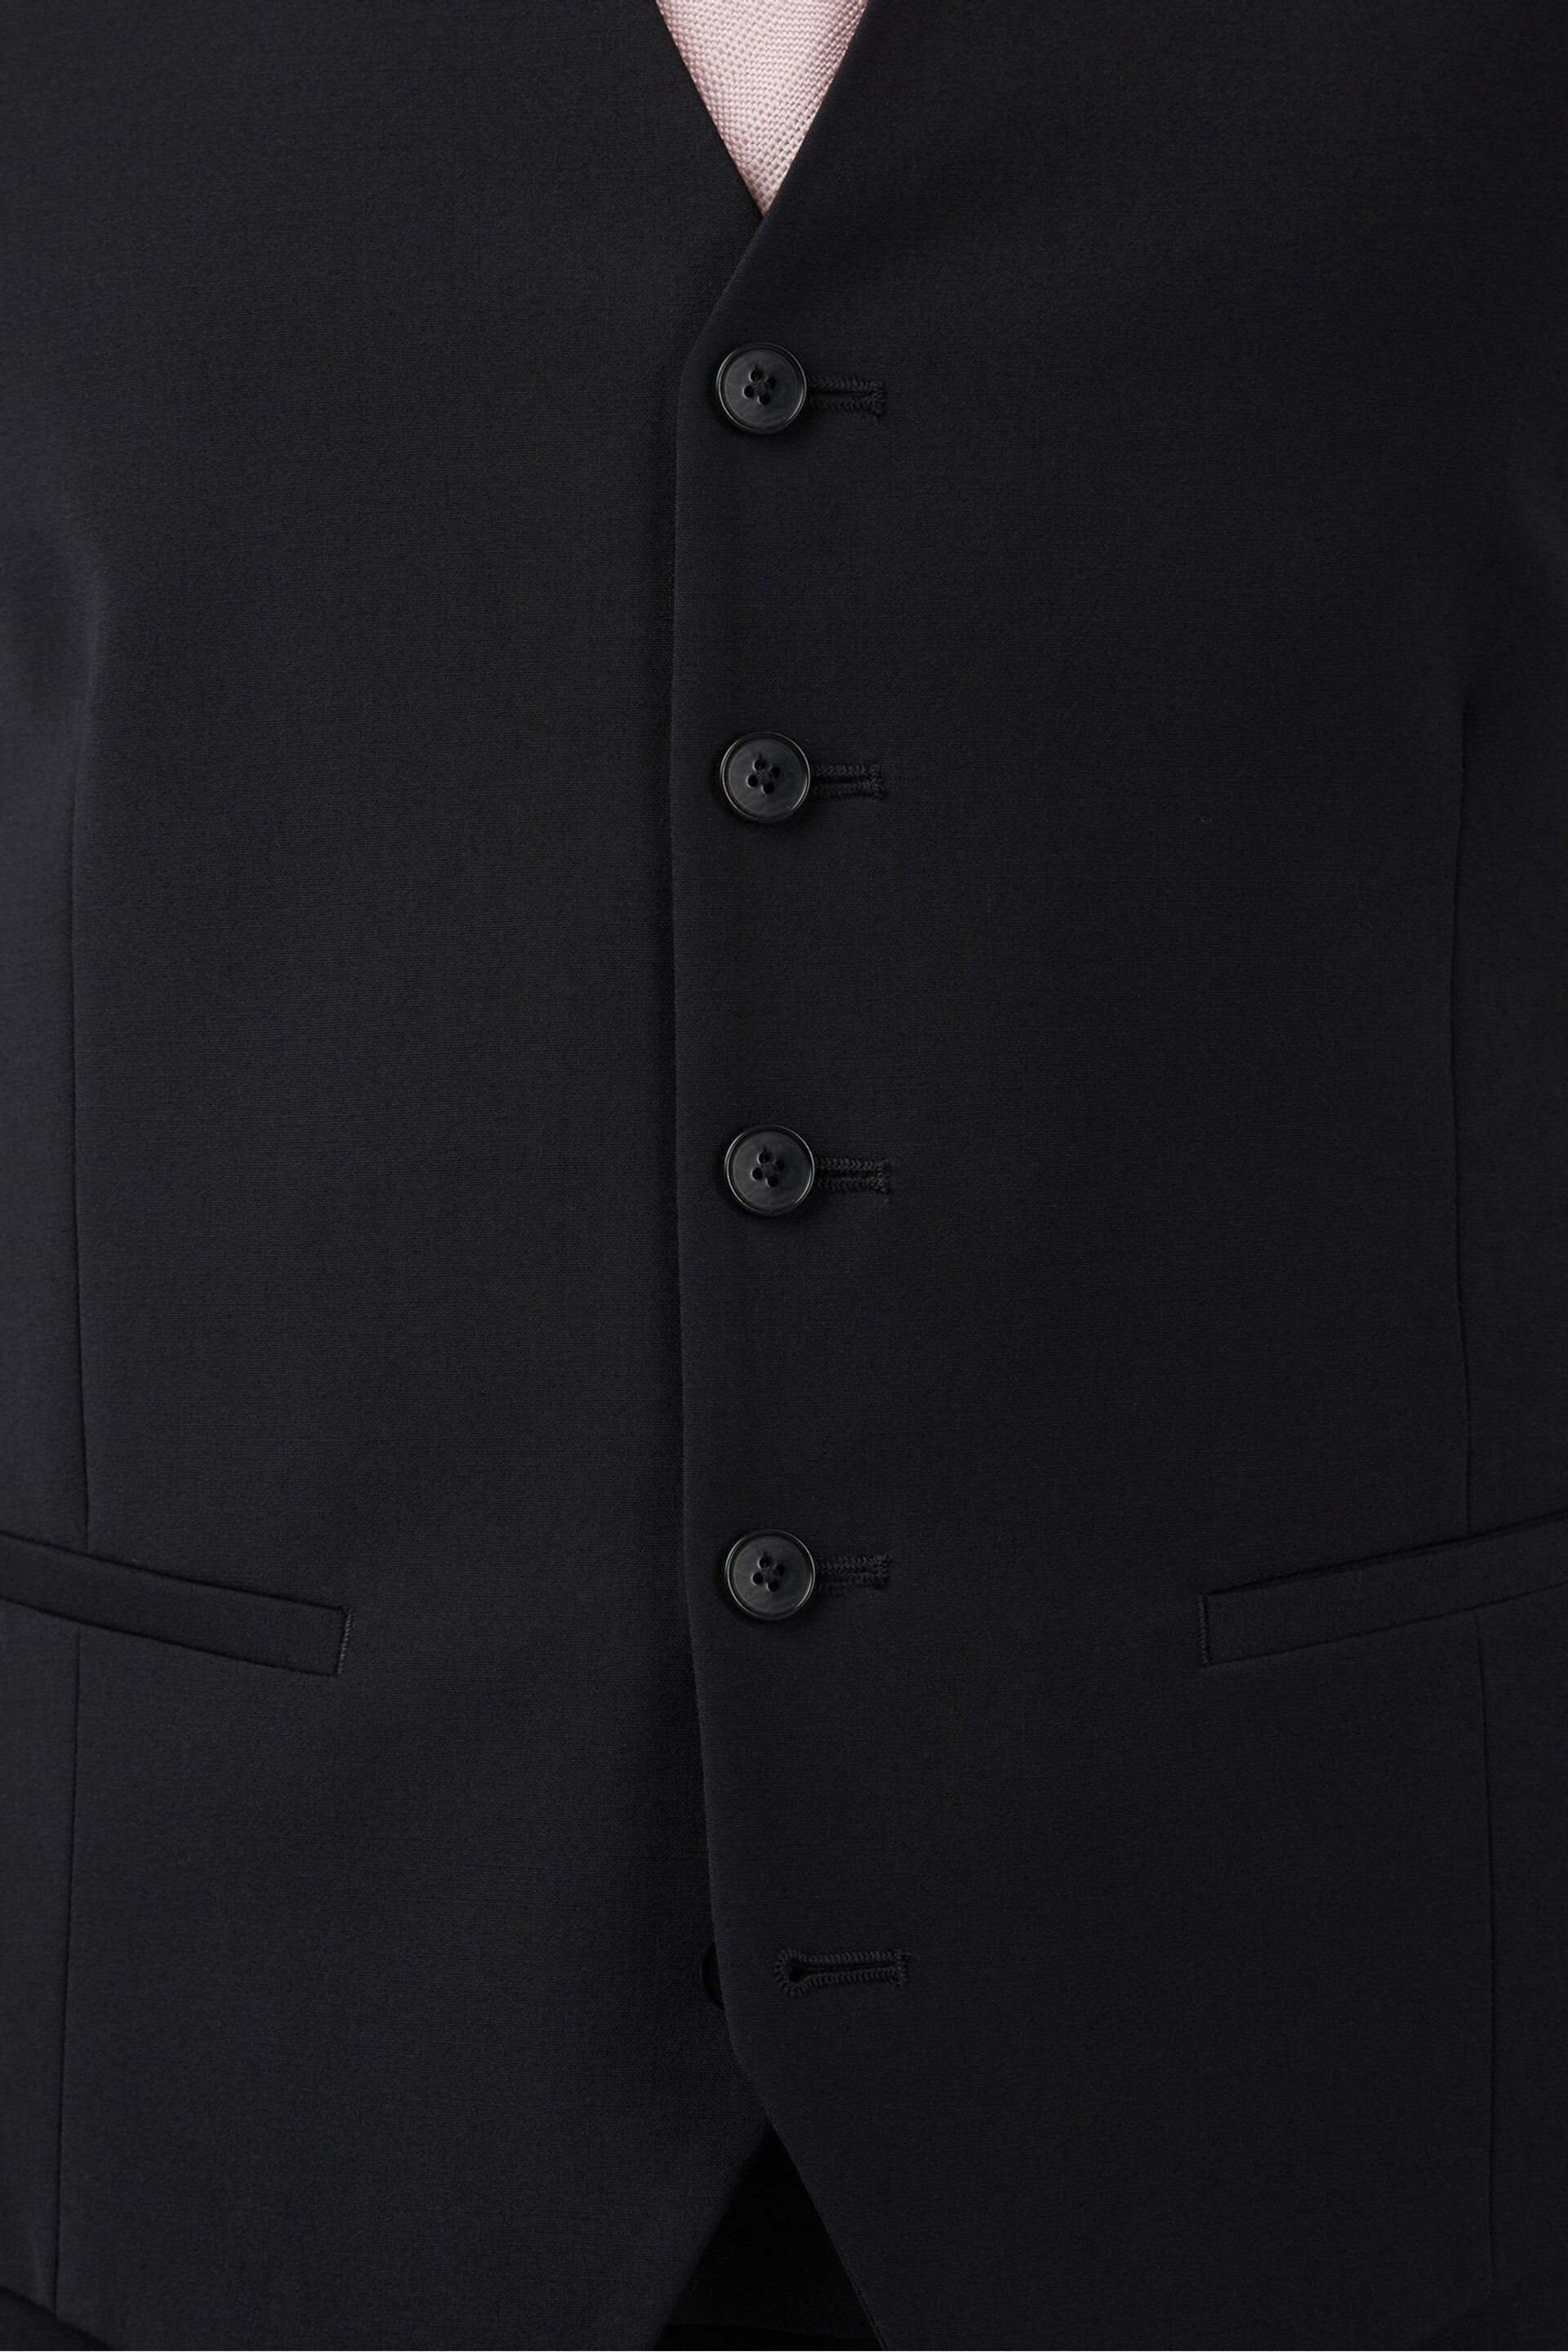 Ted Baker Premium Black Panama Slim Waistcoat - Image 3 of 4